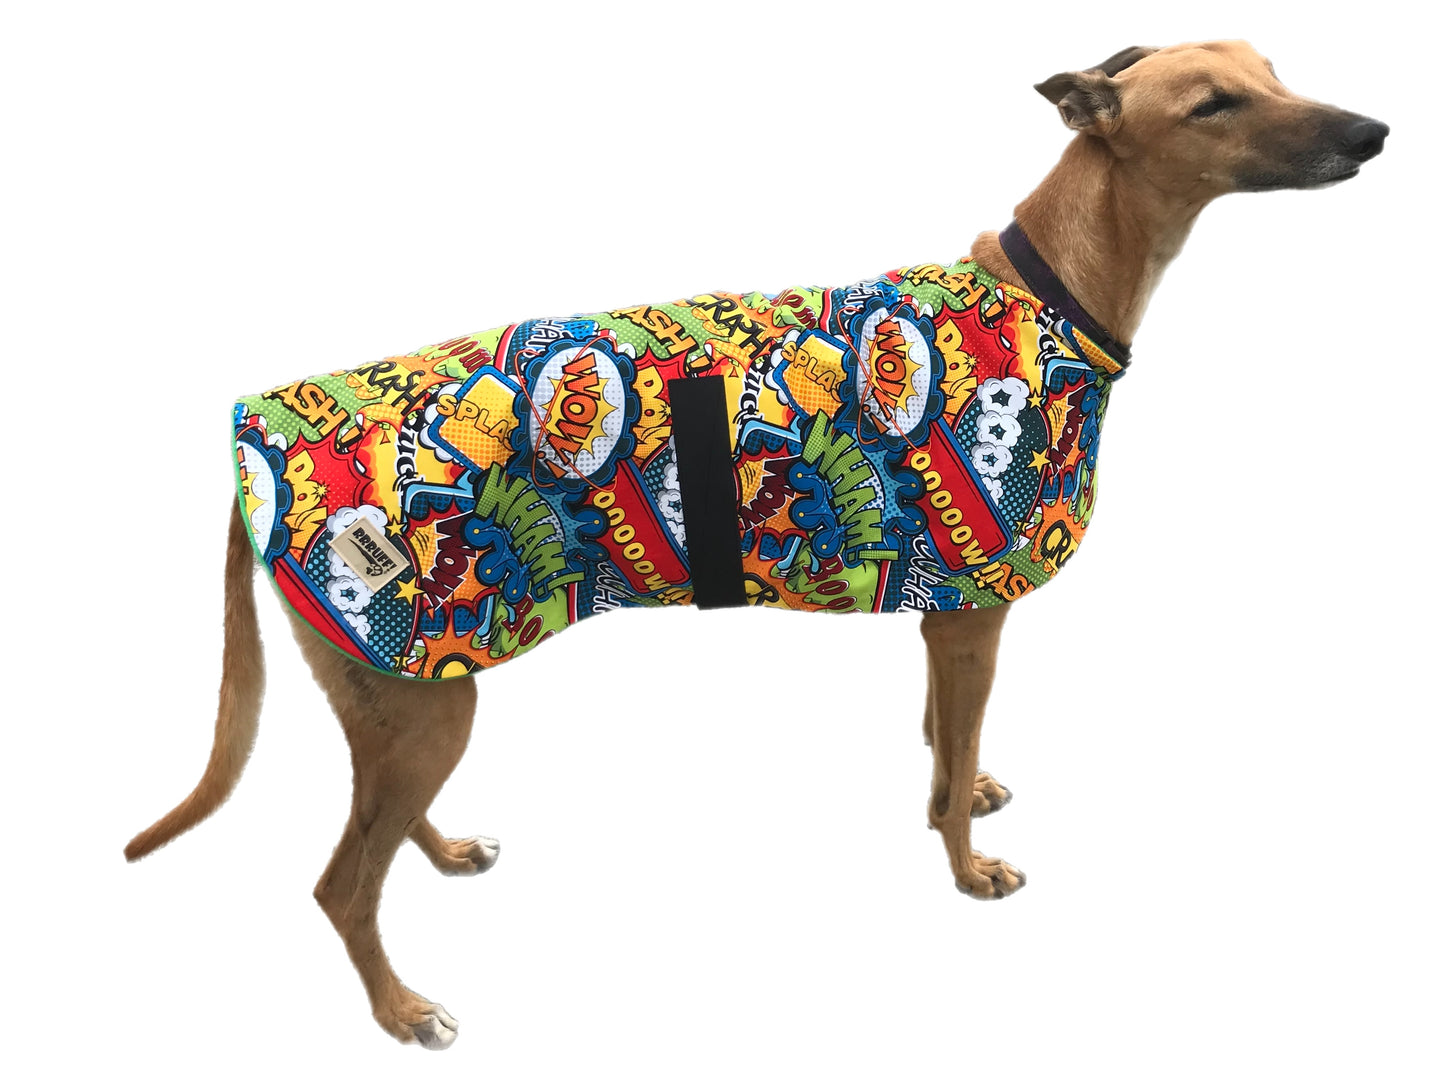 Summer/Spring range classic style Greyhound ‘kapow‘ design in cotton & fleece washable